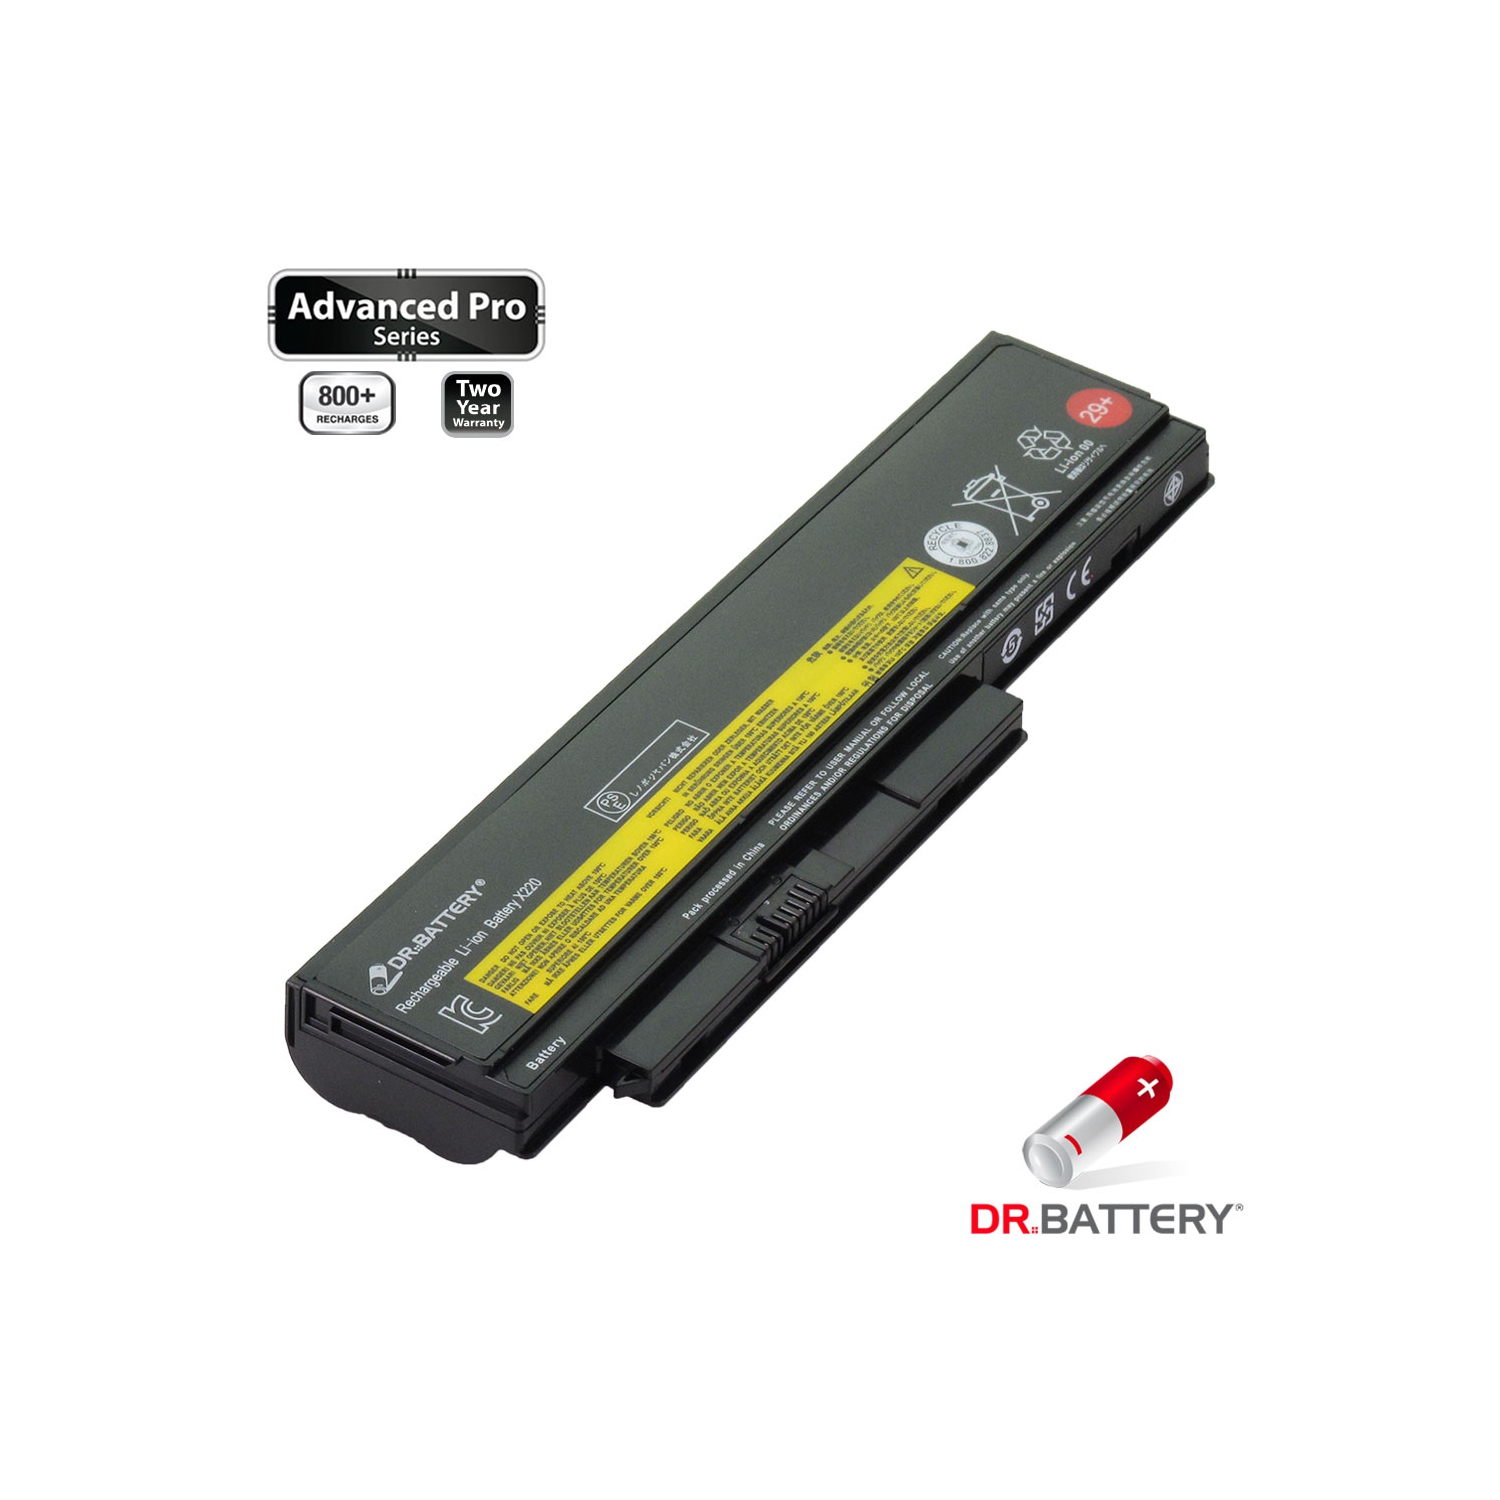 Dr. Battery - Samsung SDI Cells for Lenovo ThinkPad X220 4292 / X220 4293 / X220 Series / 42T4873 / 42T4875 - Free Shipping